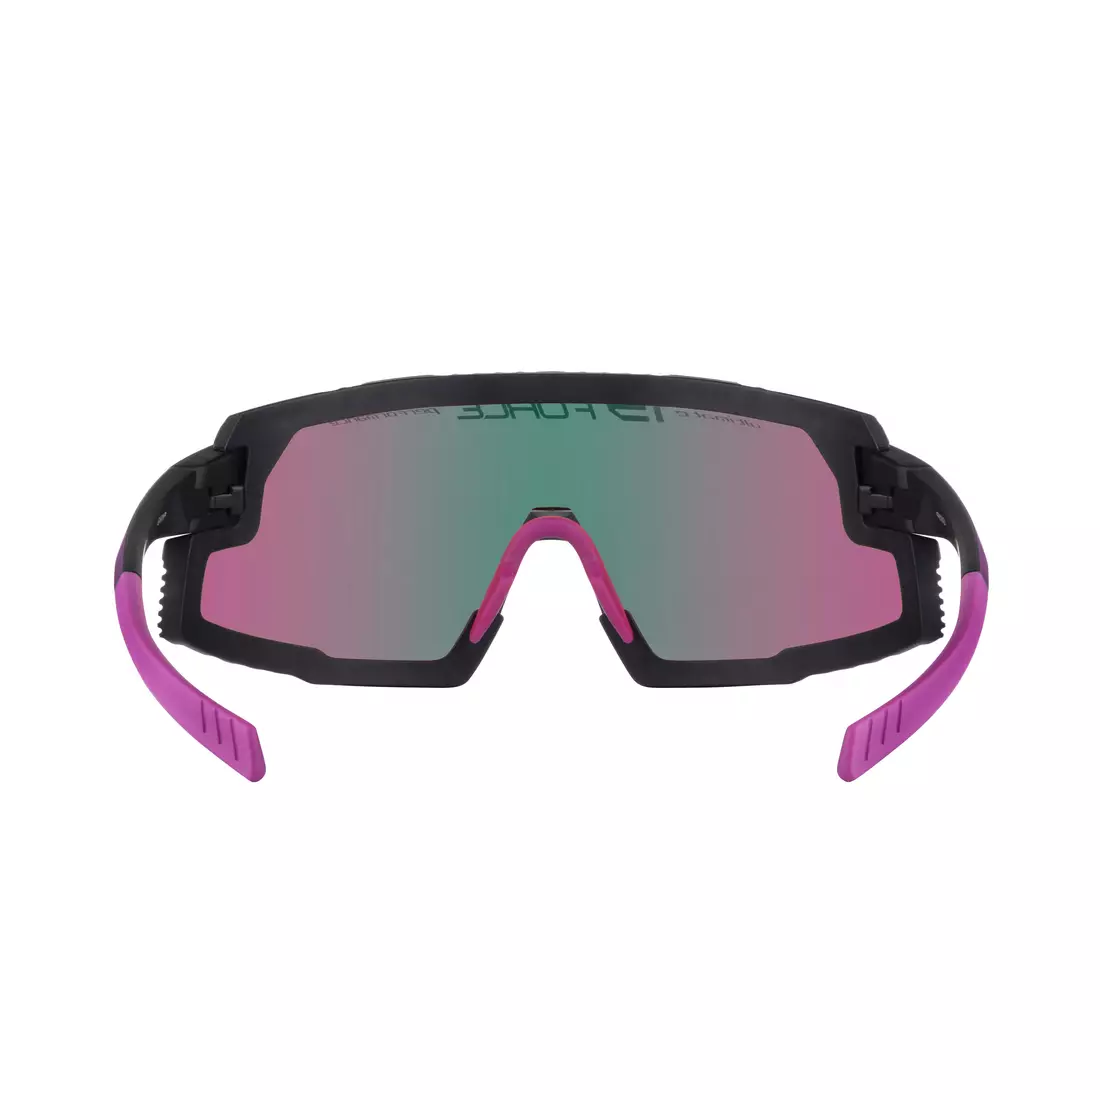 FORCE GRIP Ochelari de sport, lentile violete REVO, negru și roz